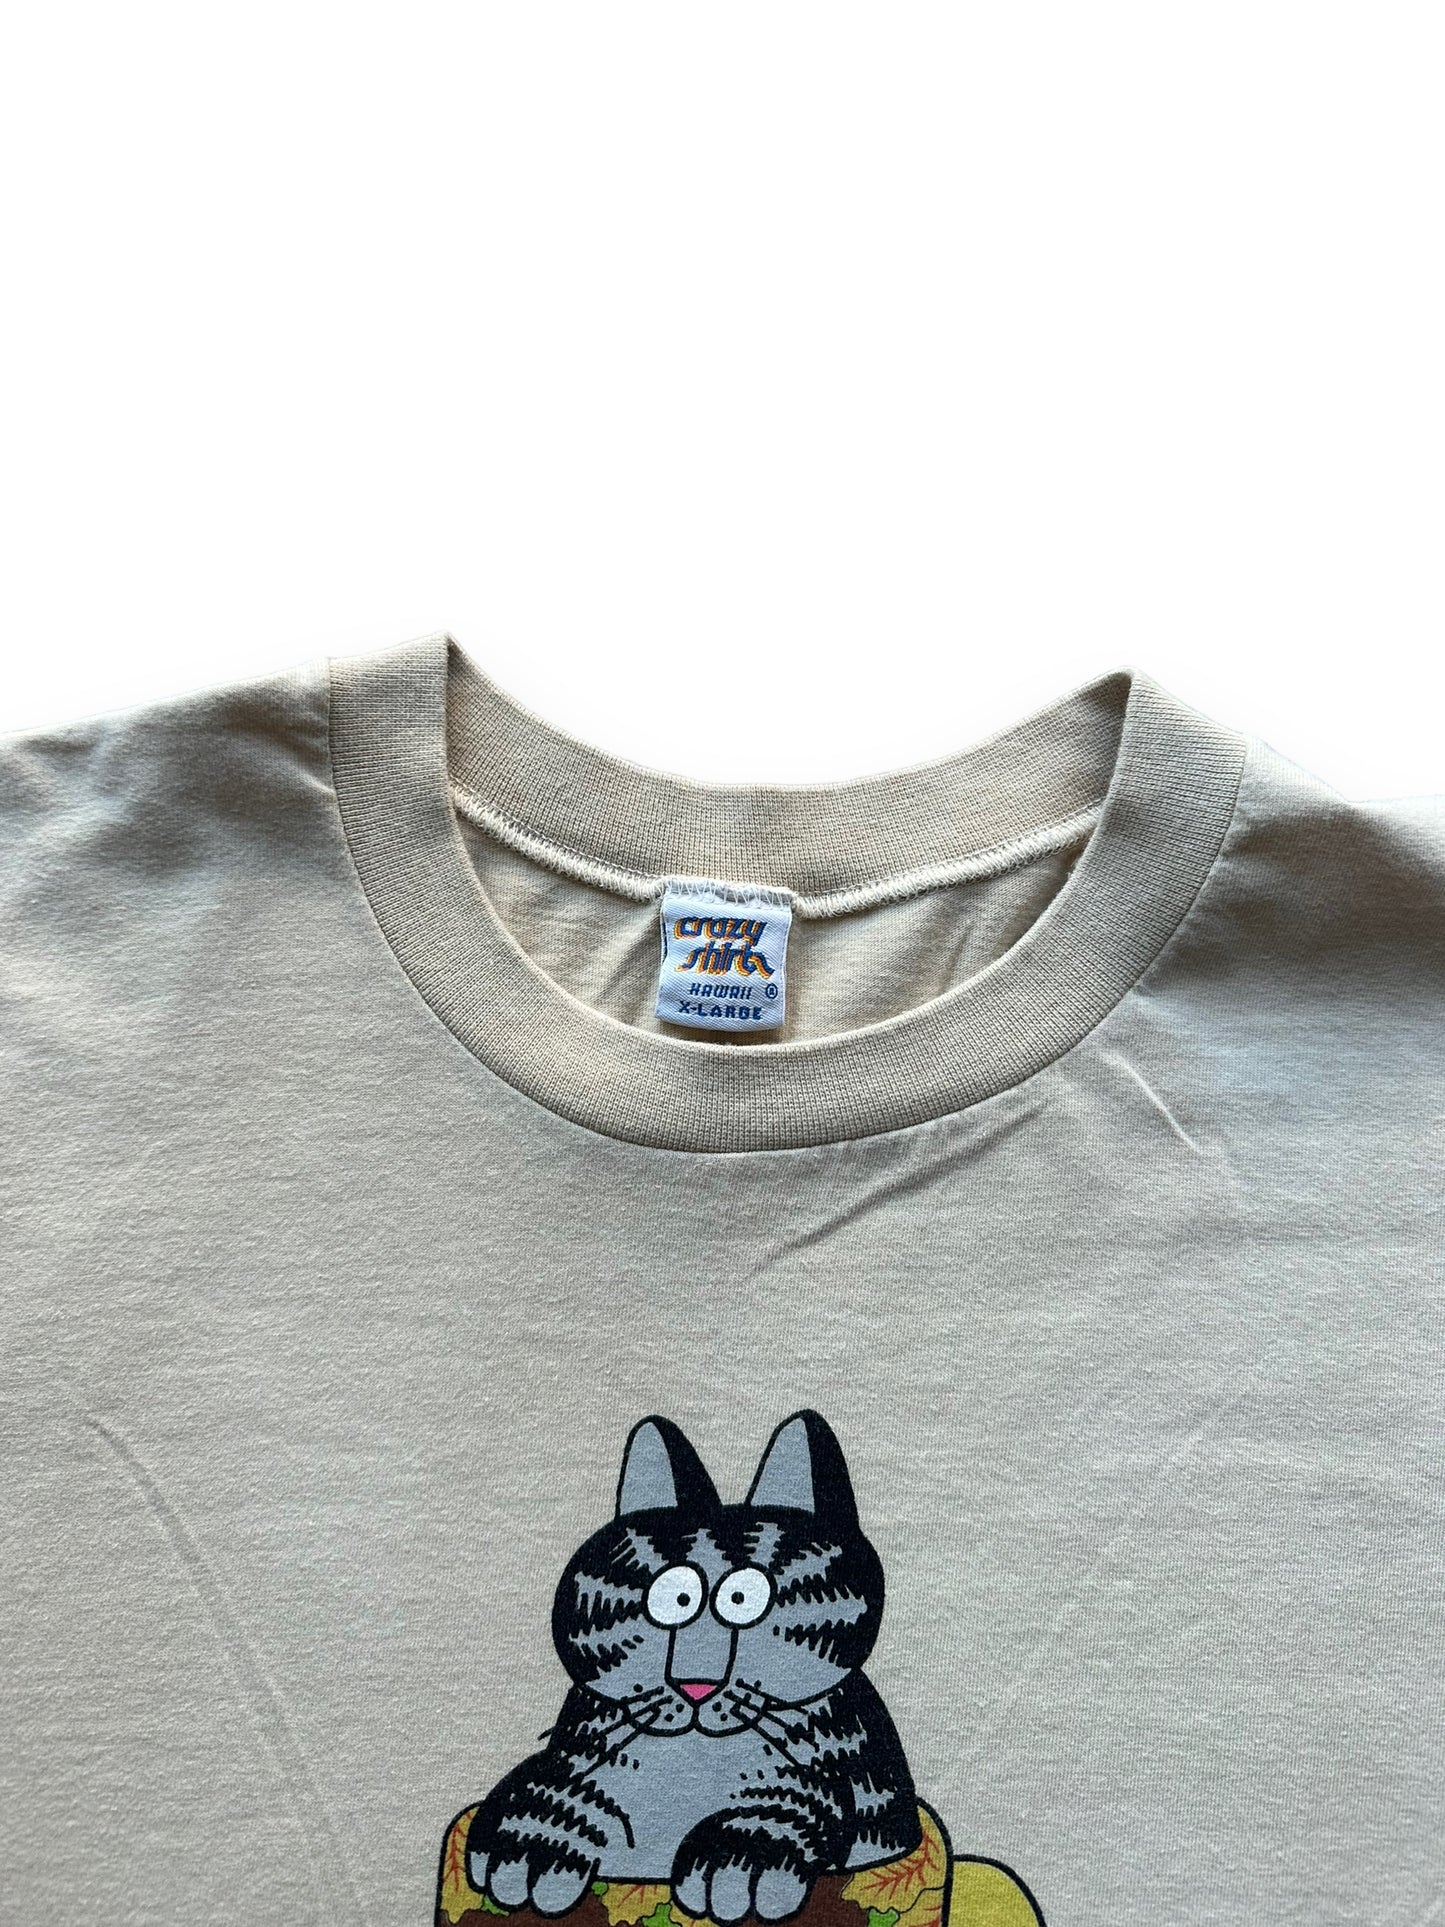 Collar of Vintage B. Kliban "Coffee Tea or Meow?" Tee SZ XL |  Vintage Cat Tee Seattle | Barn Owl Vintage